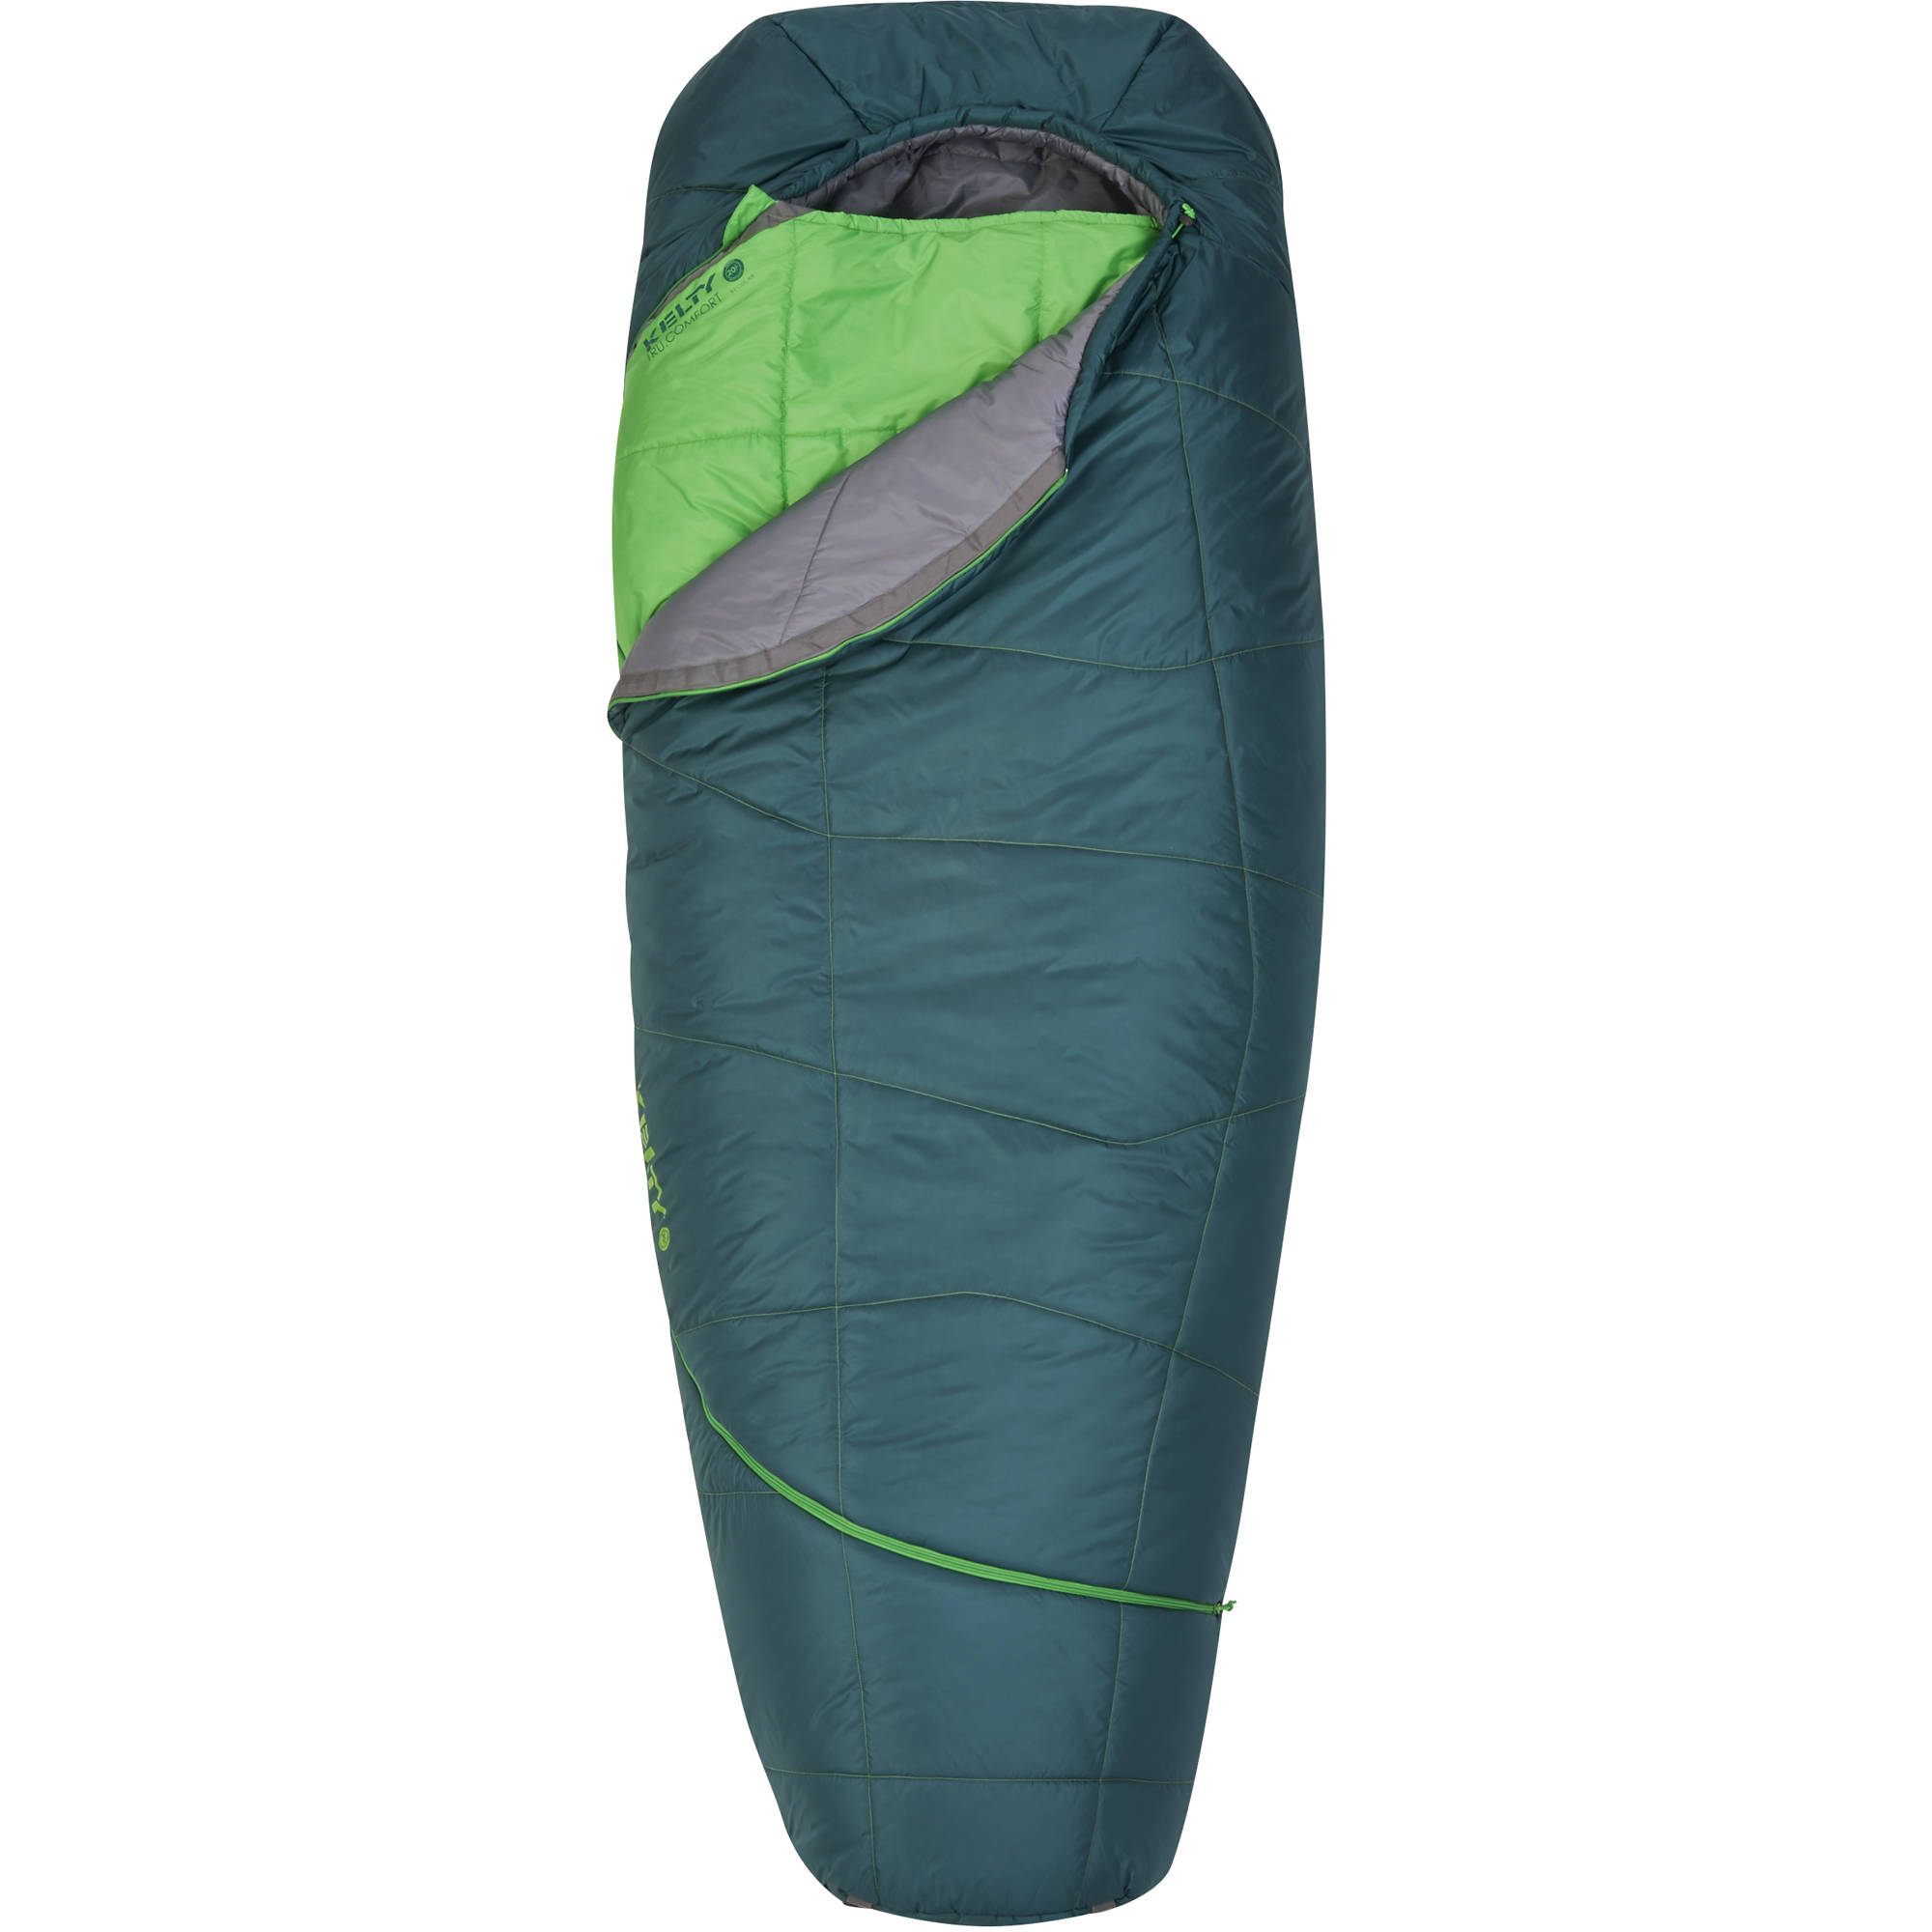 sleeping bag offers